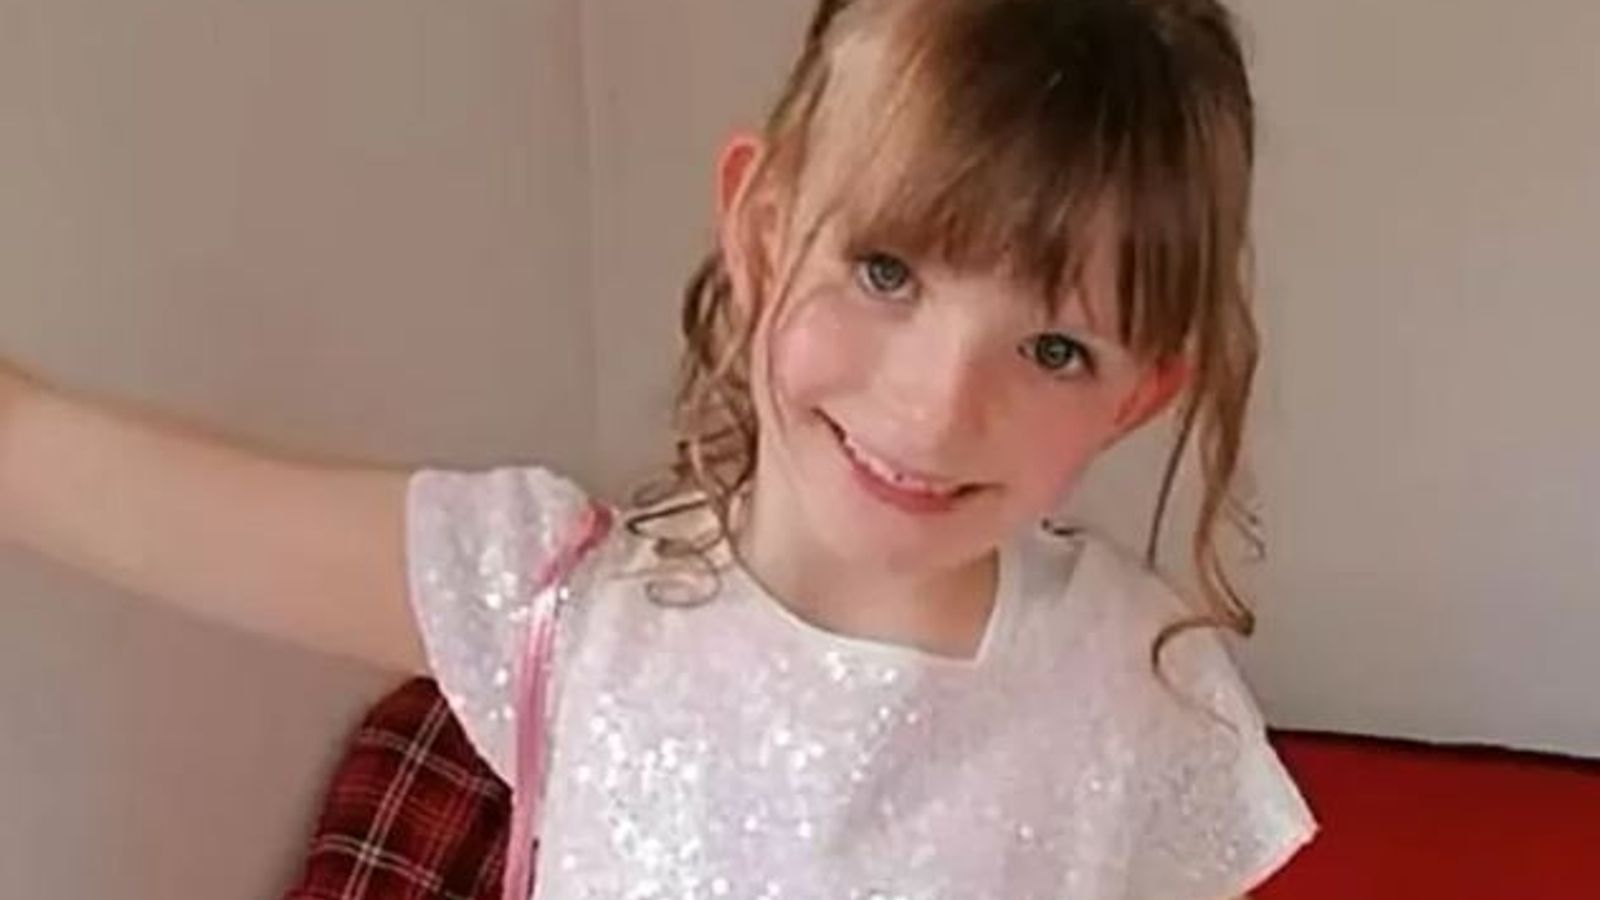 British girl, 11, shot dead in France 'after work on hedges inflamed dispute'